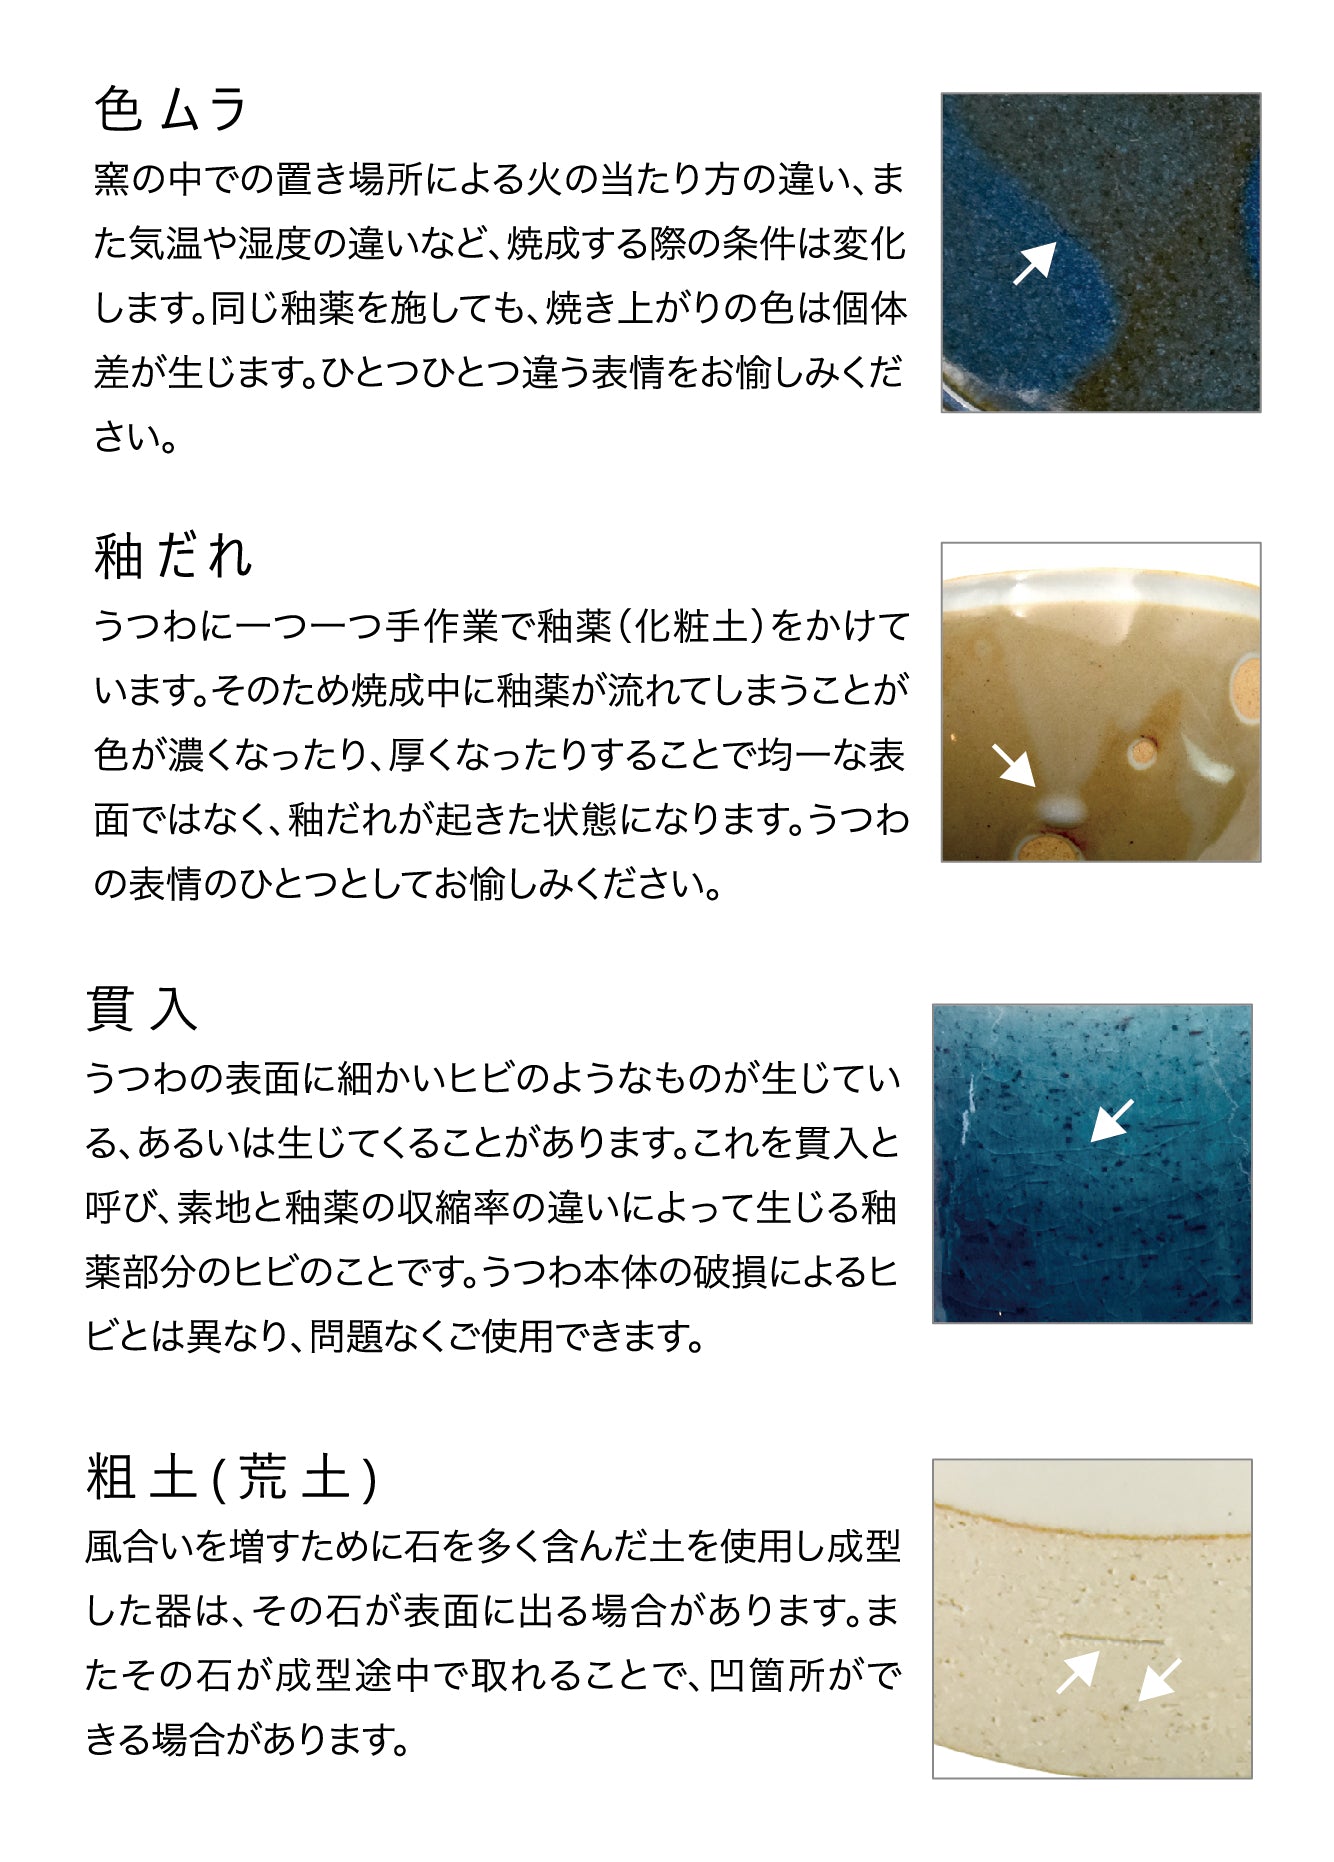 YUKURI Book cafe Mug Cup Kiln Change Gray (08295)